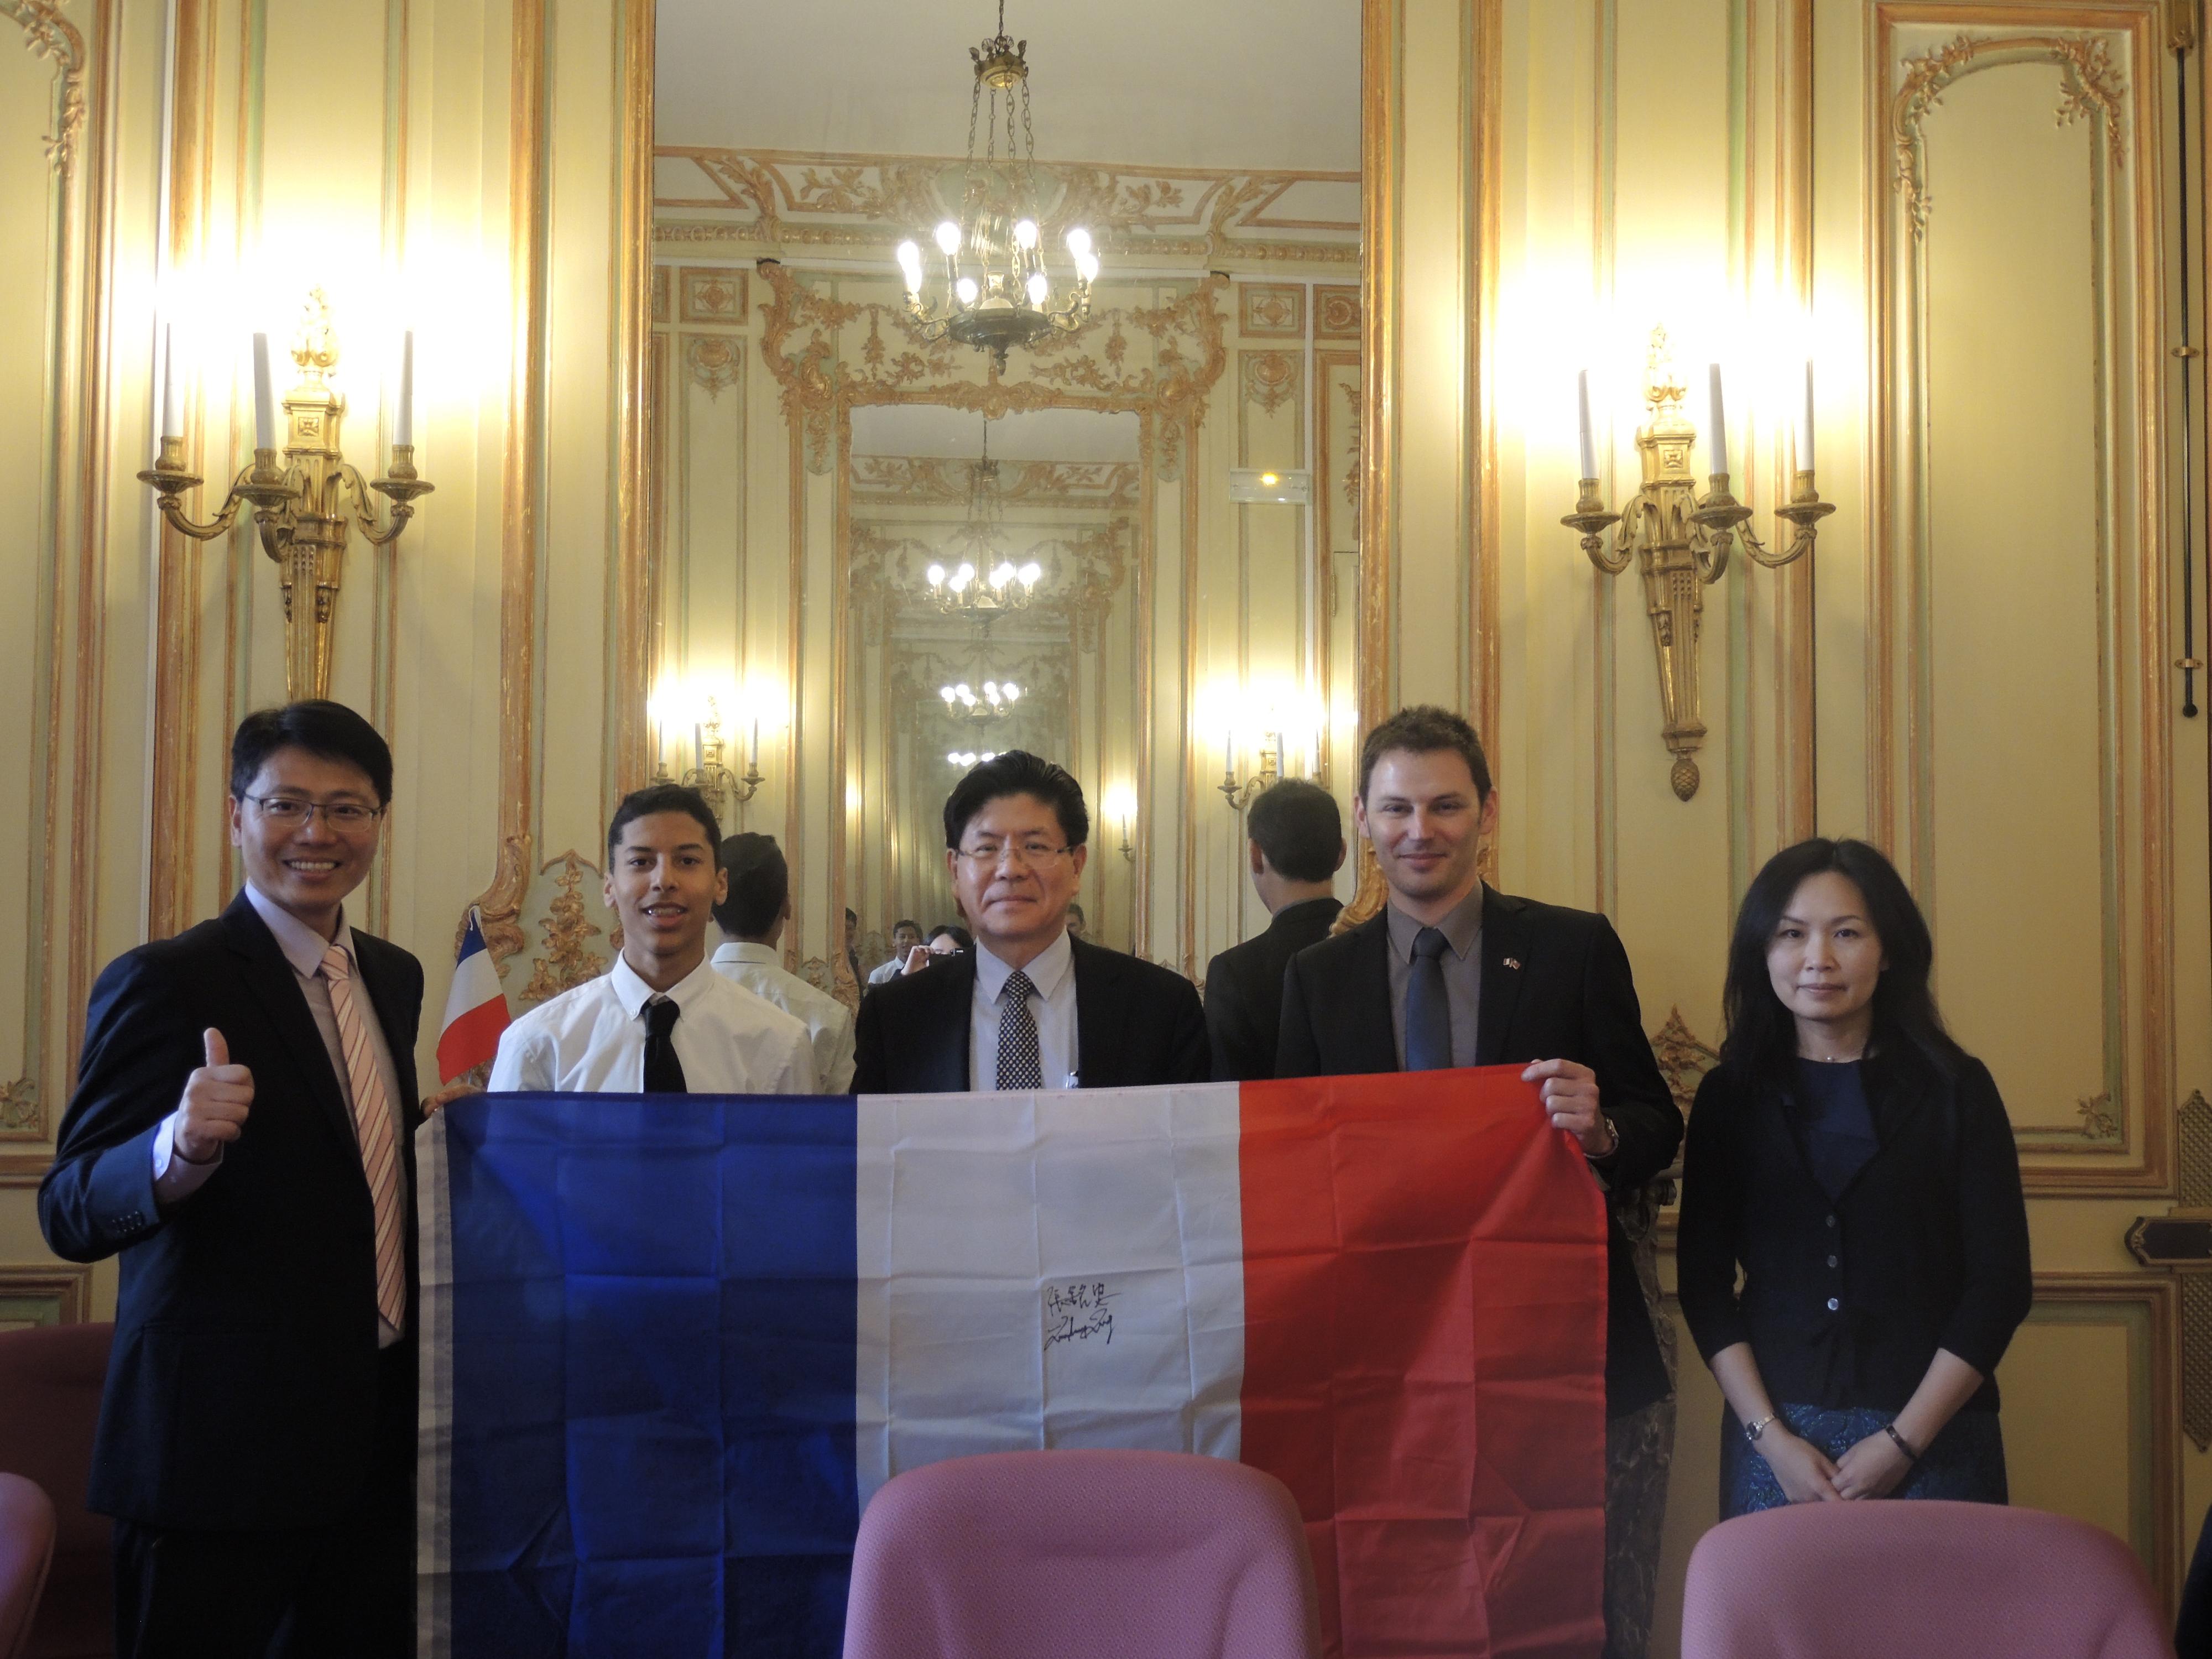 P. Neruda國中學生代表請張大使於法國國旗簽字